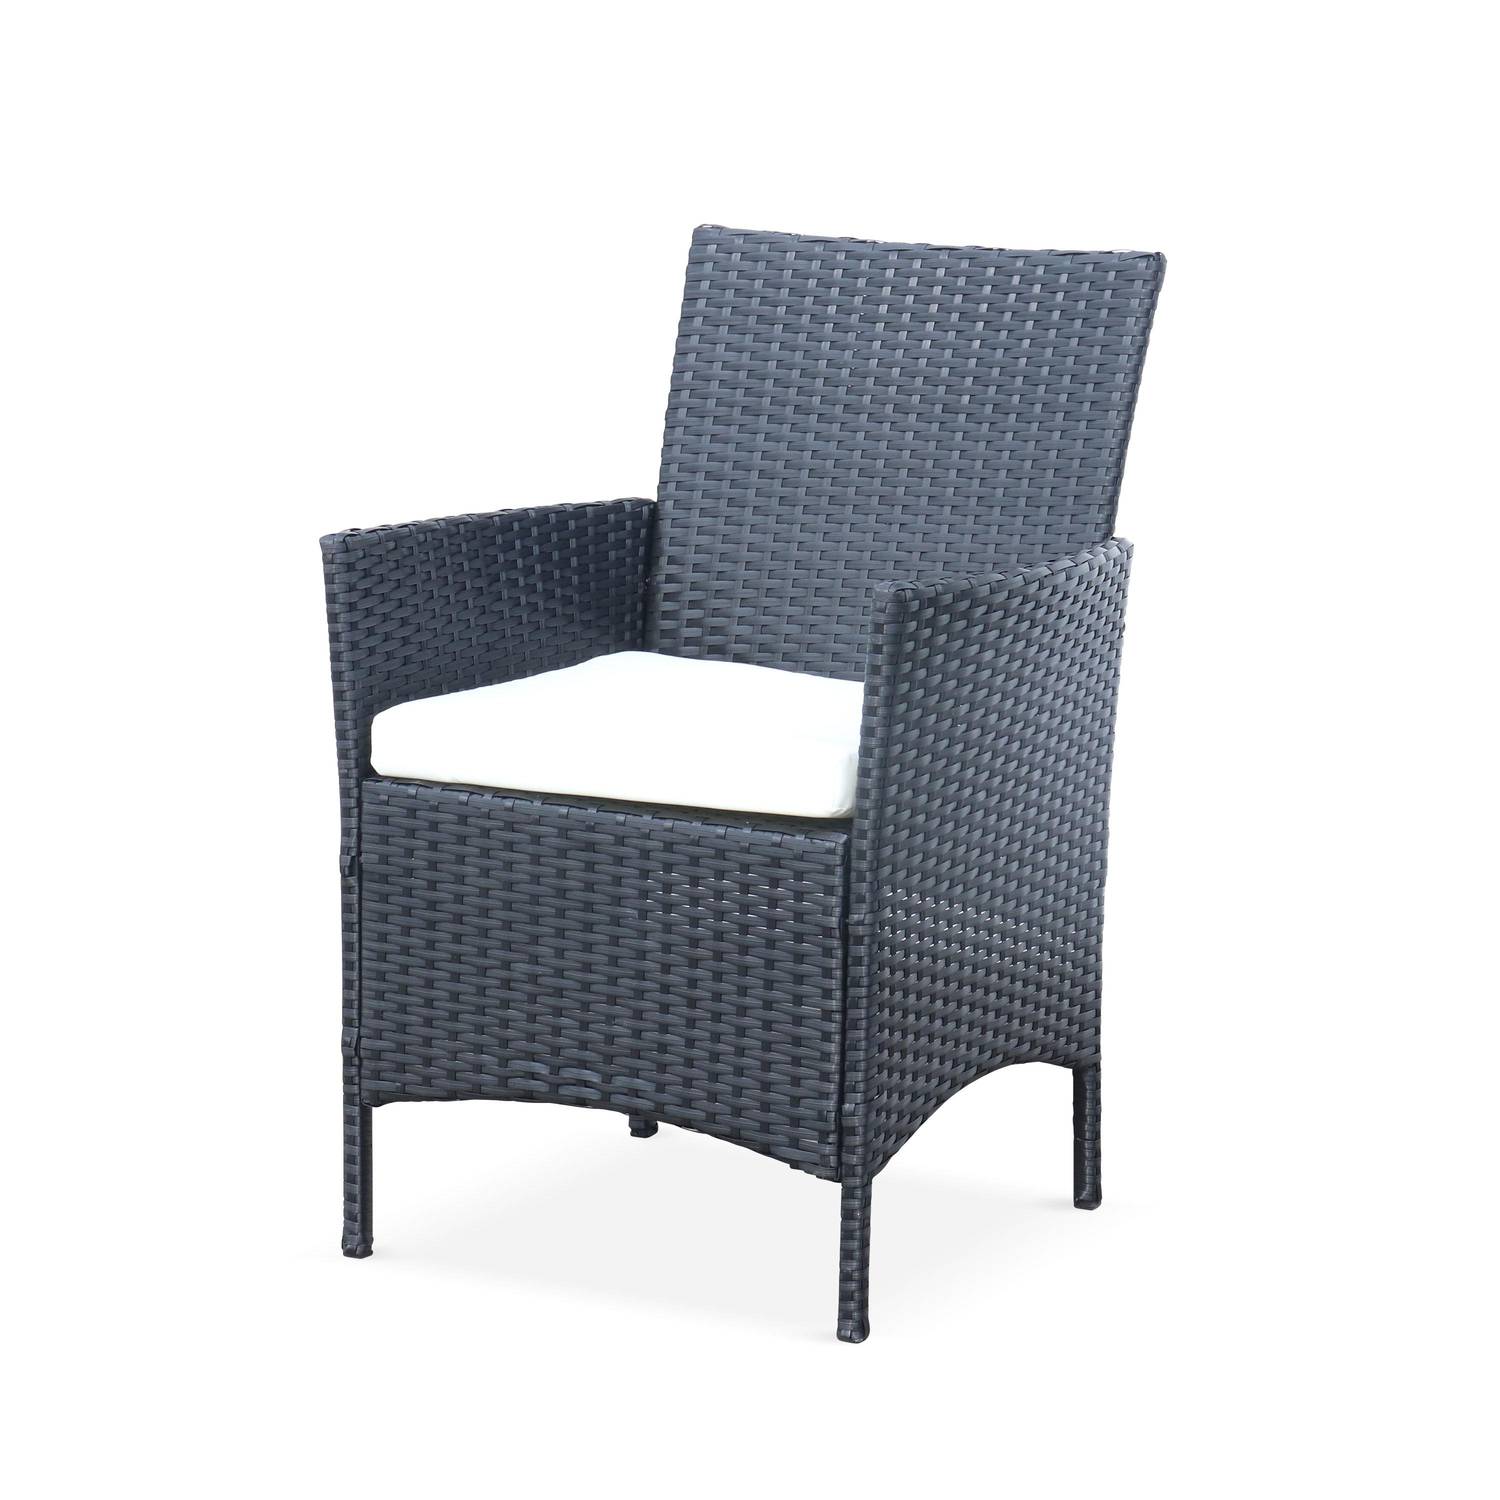 4-seater polyrattan garden sofa set - sofa, 2 armchairs, coffee table - Moltes - Black rattan, Off-white cushions Photo3